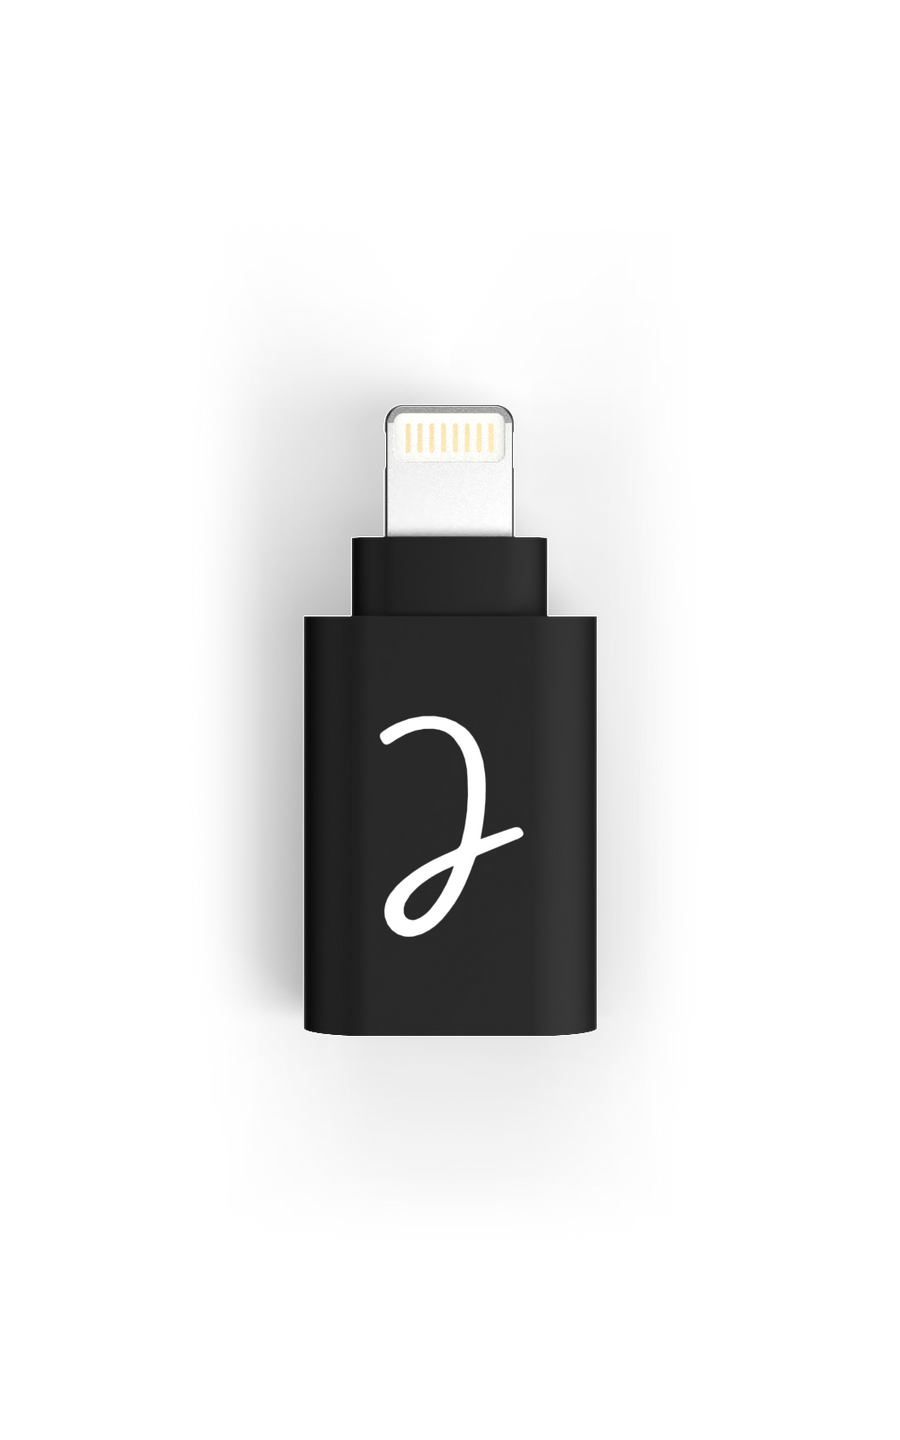 USB-C to Lightening adapter